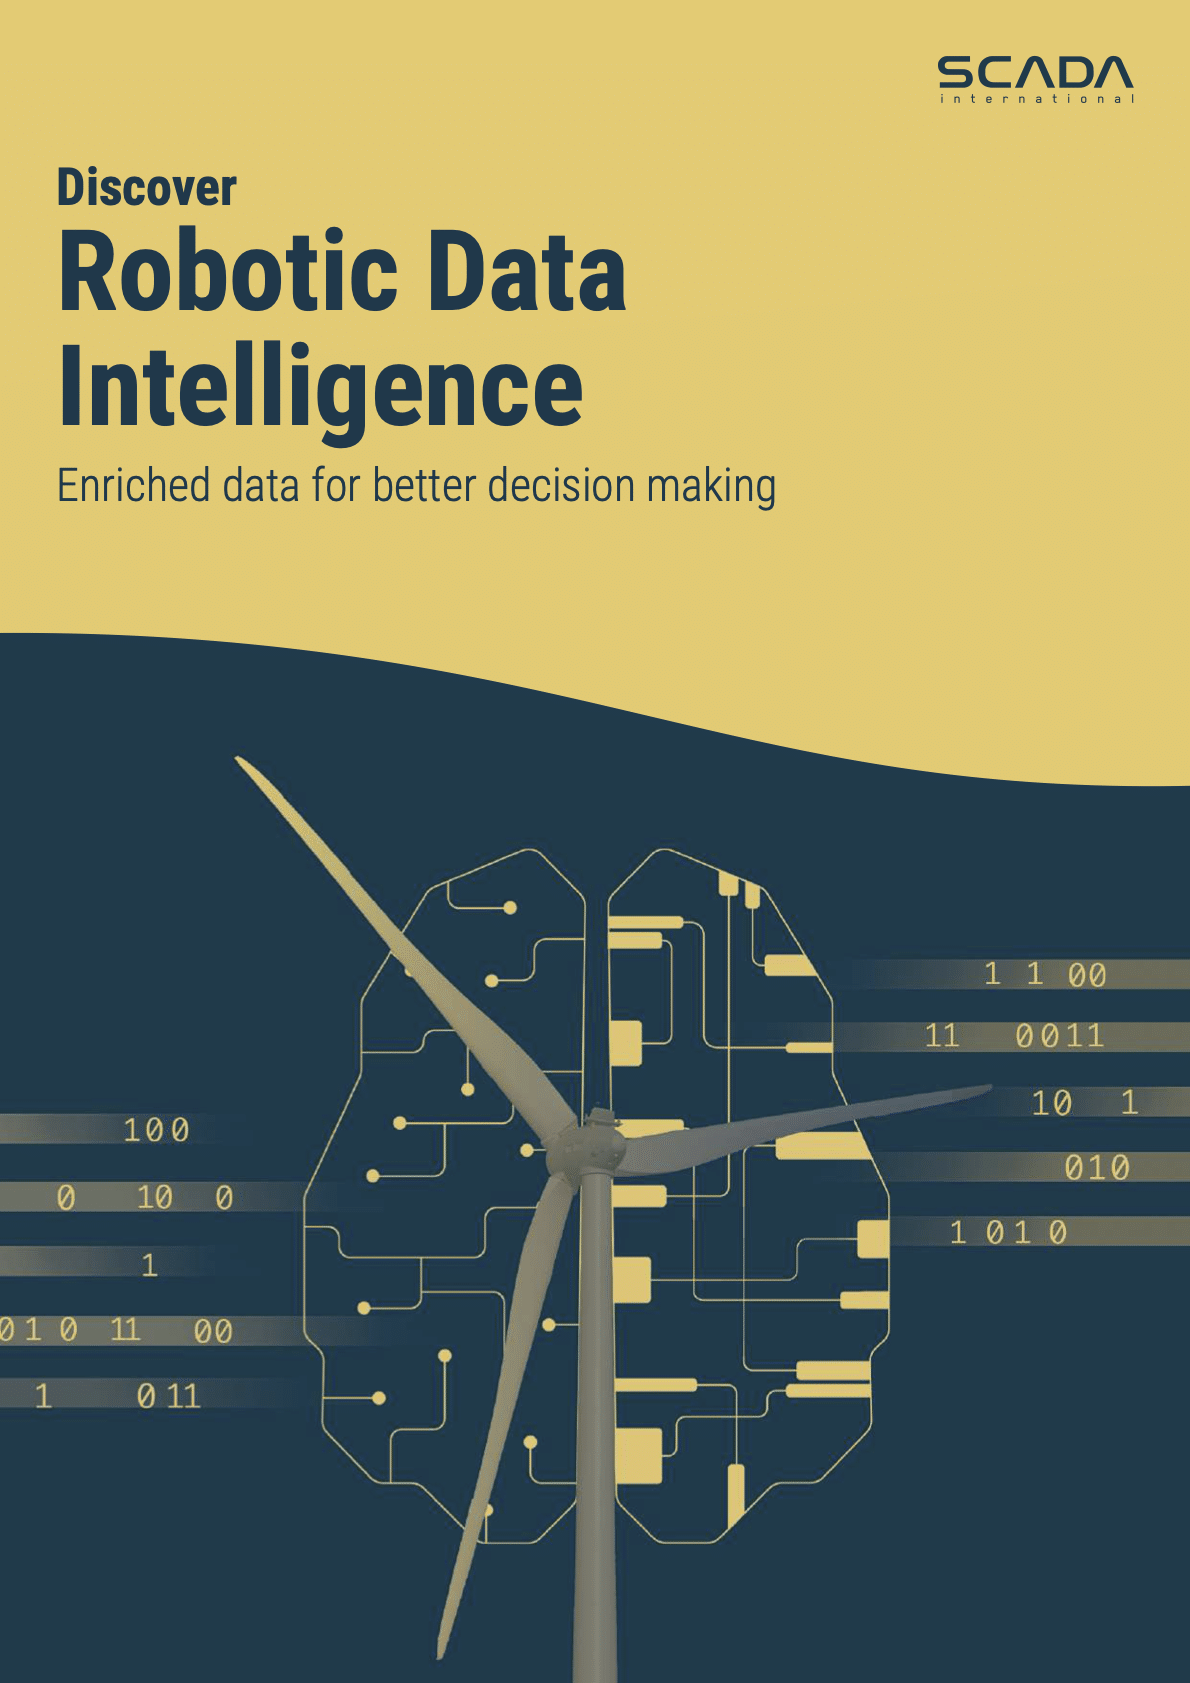 Robotic Data Intelligence brochure